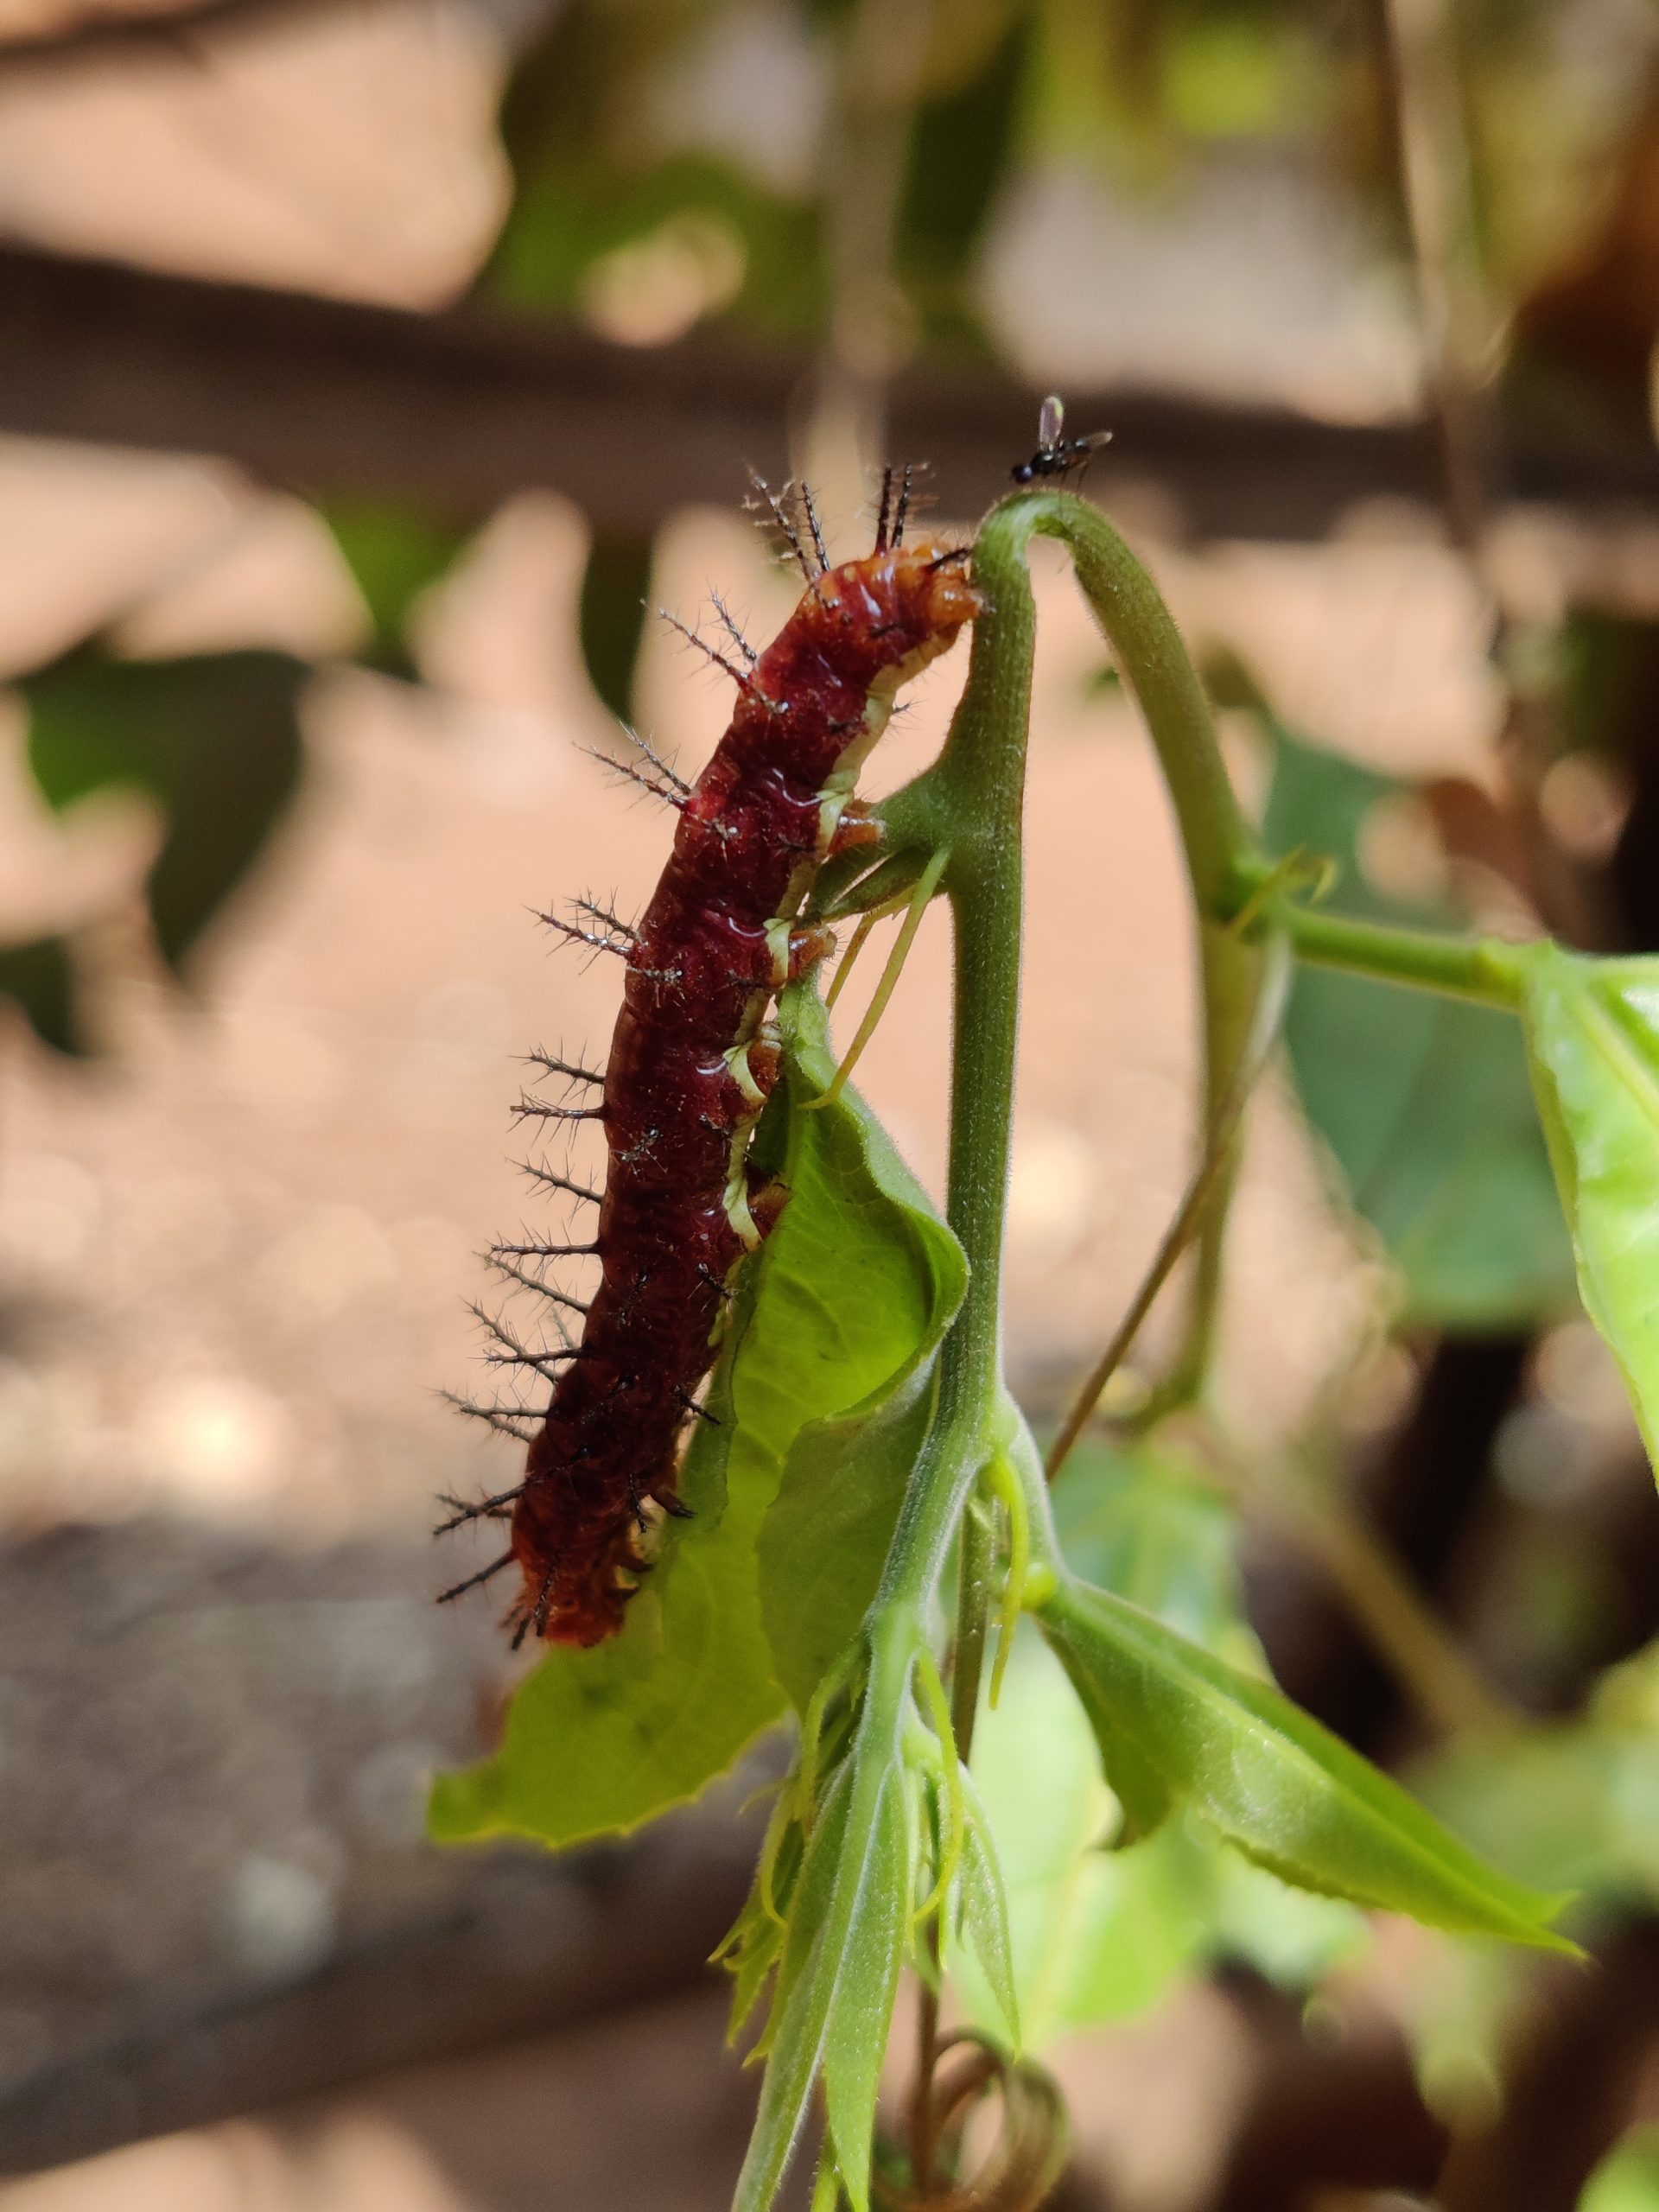 Caterpillar bug on the plant